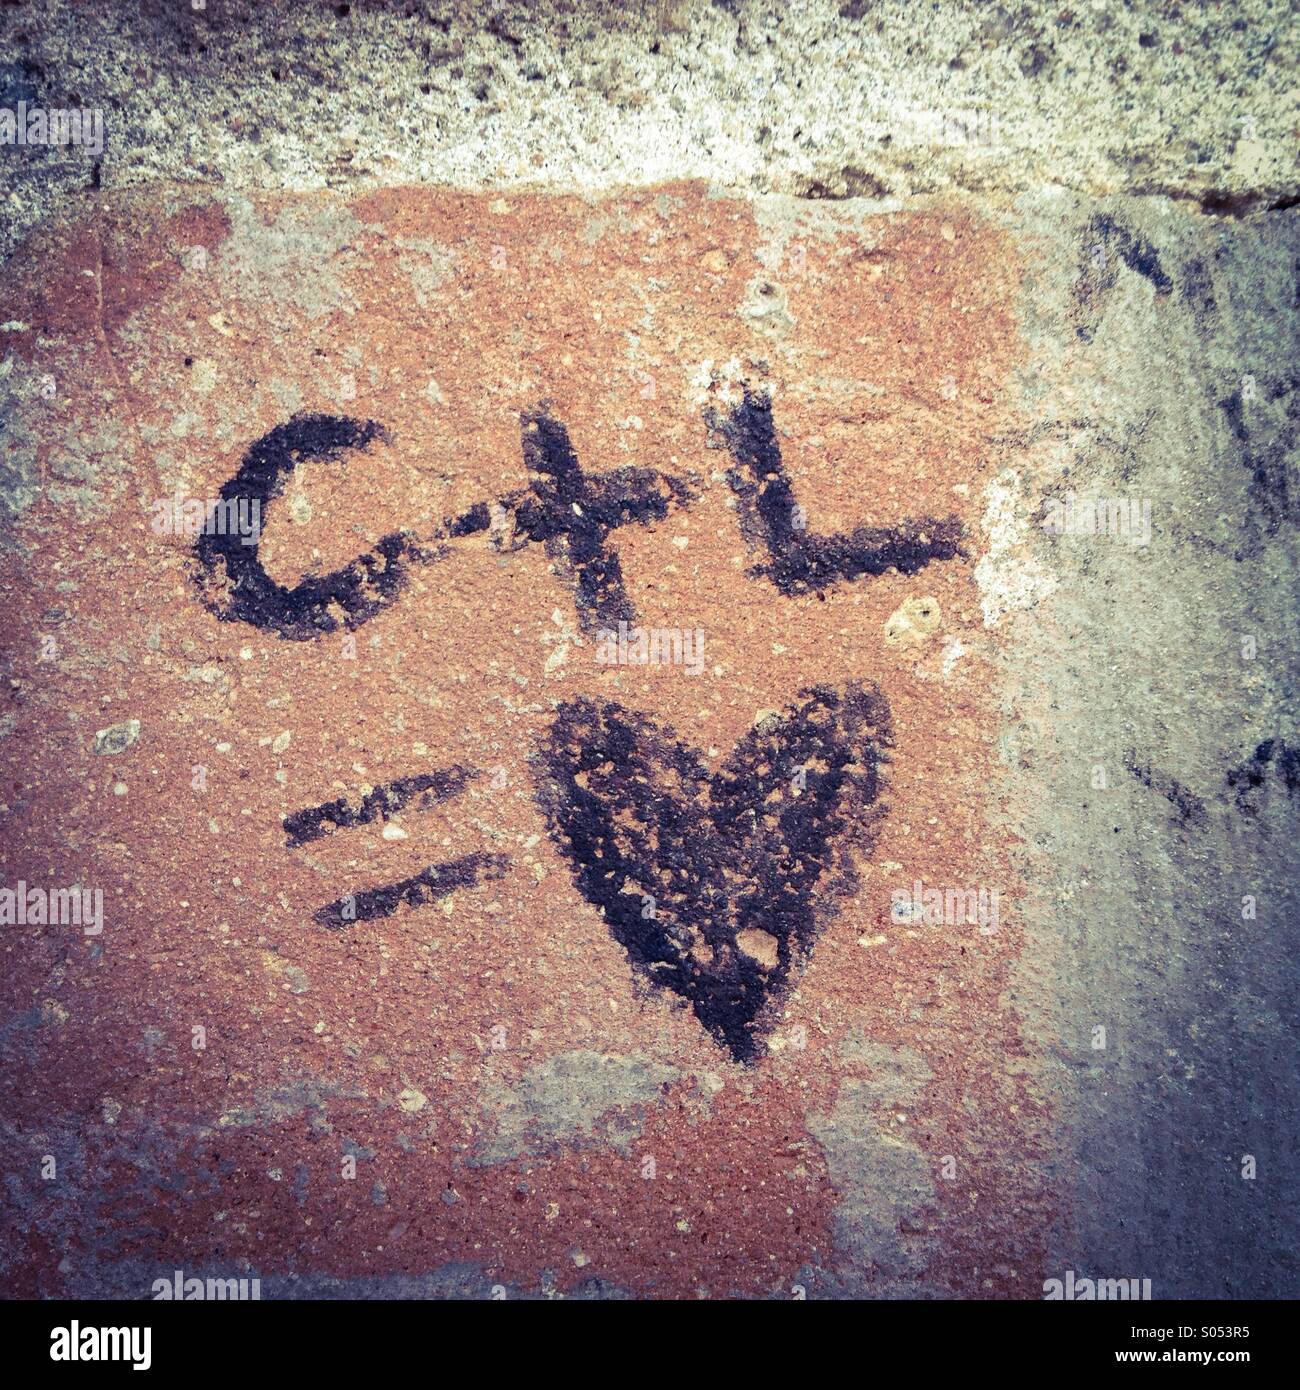 Graffiti on an urban wall professes love. Stock Photo